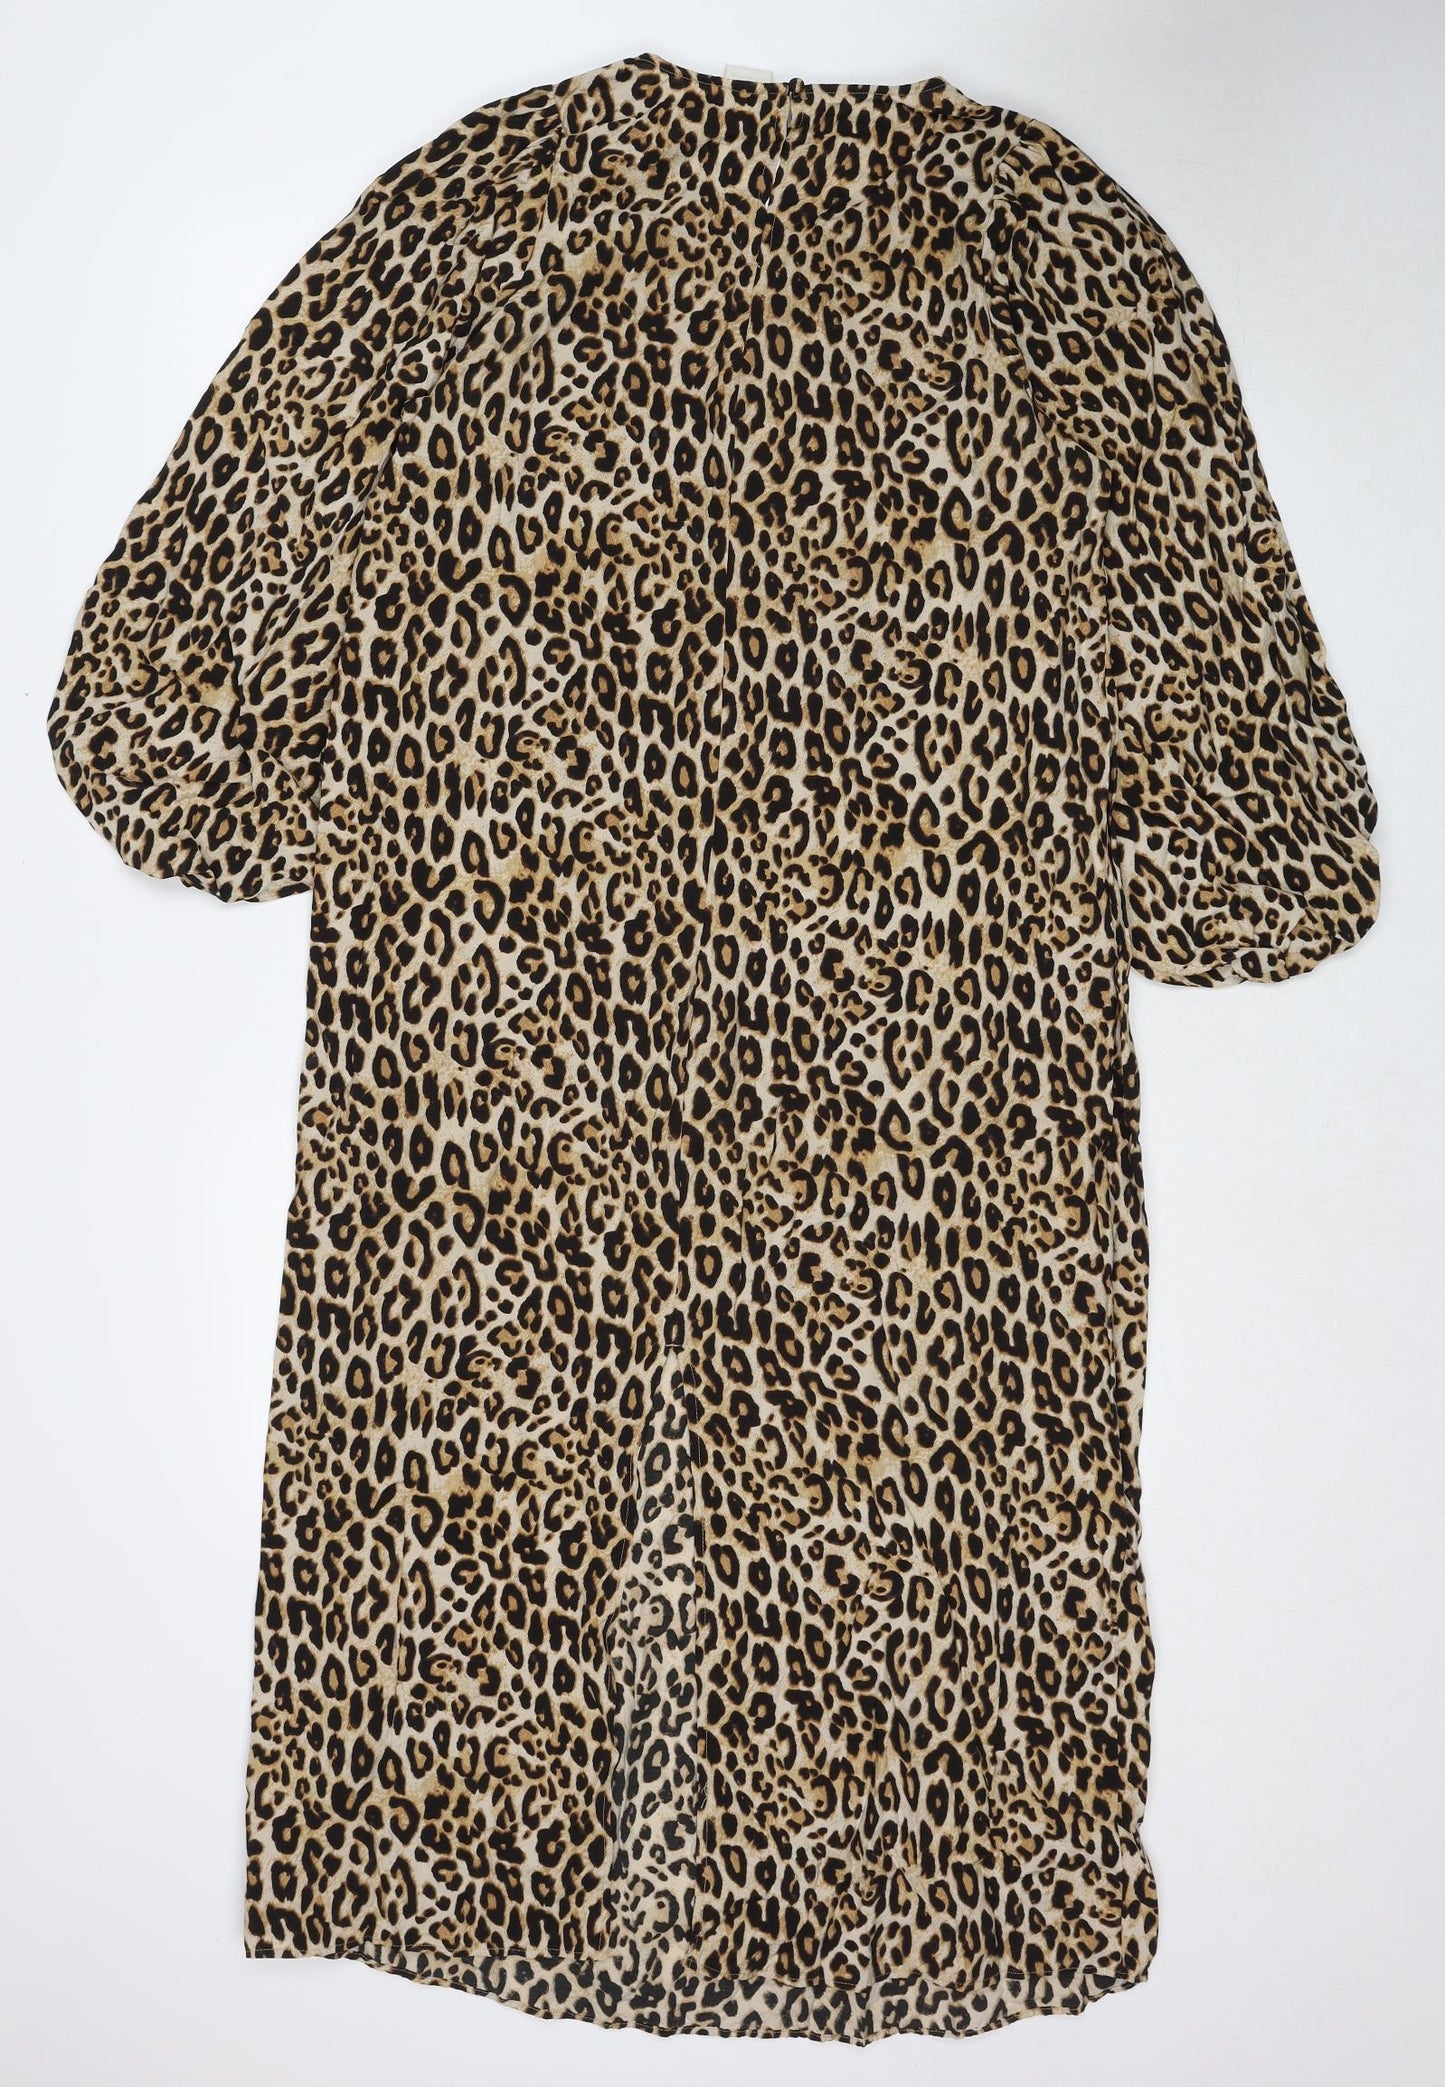 H&M Womens Brown Animal Print Viscose Shift Size S Round Neck Button - Leopard Print